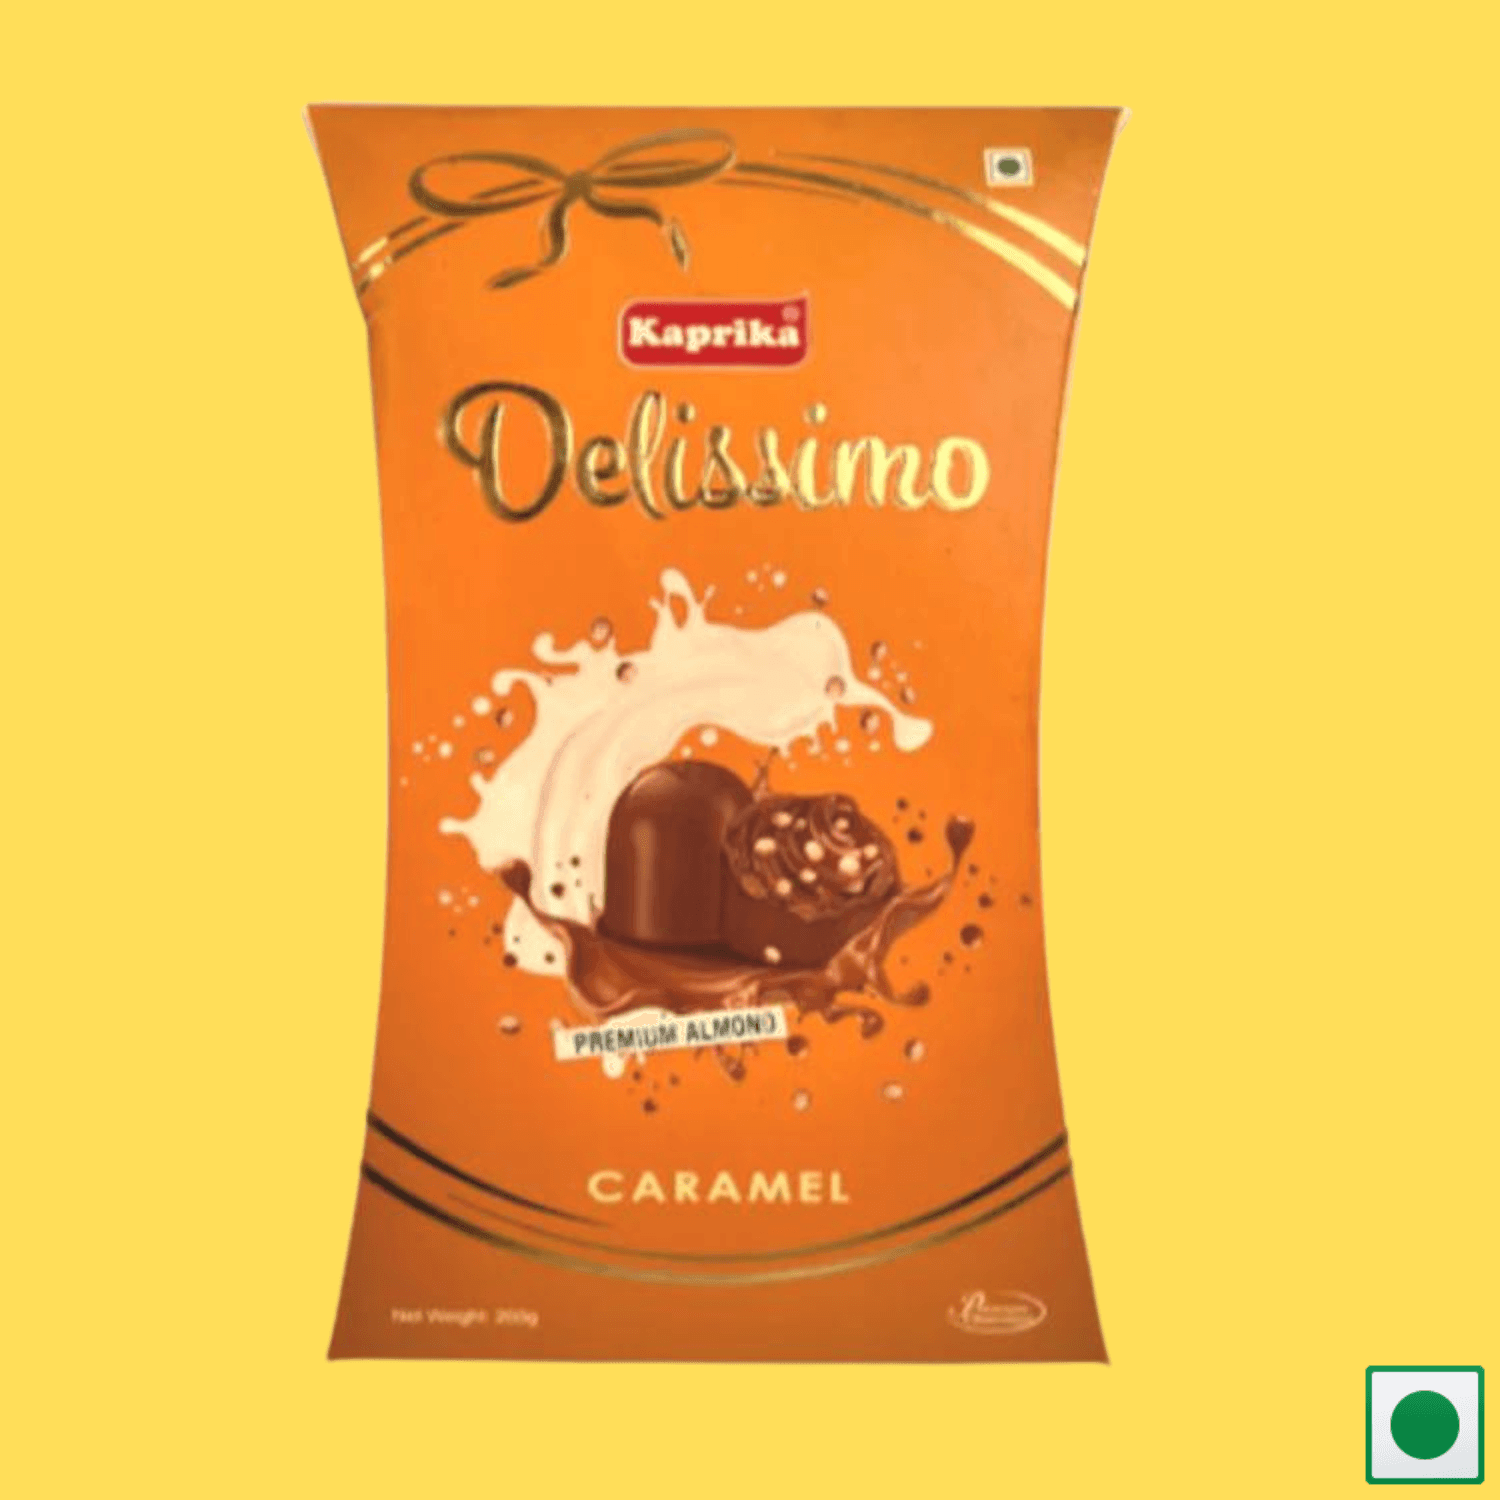 Kaprika Delissimo Premium Caramel Chocolate with Almond Crumbs, 200g - Super 7 Mart